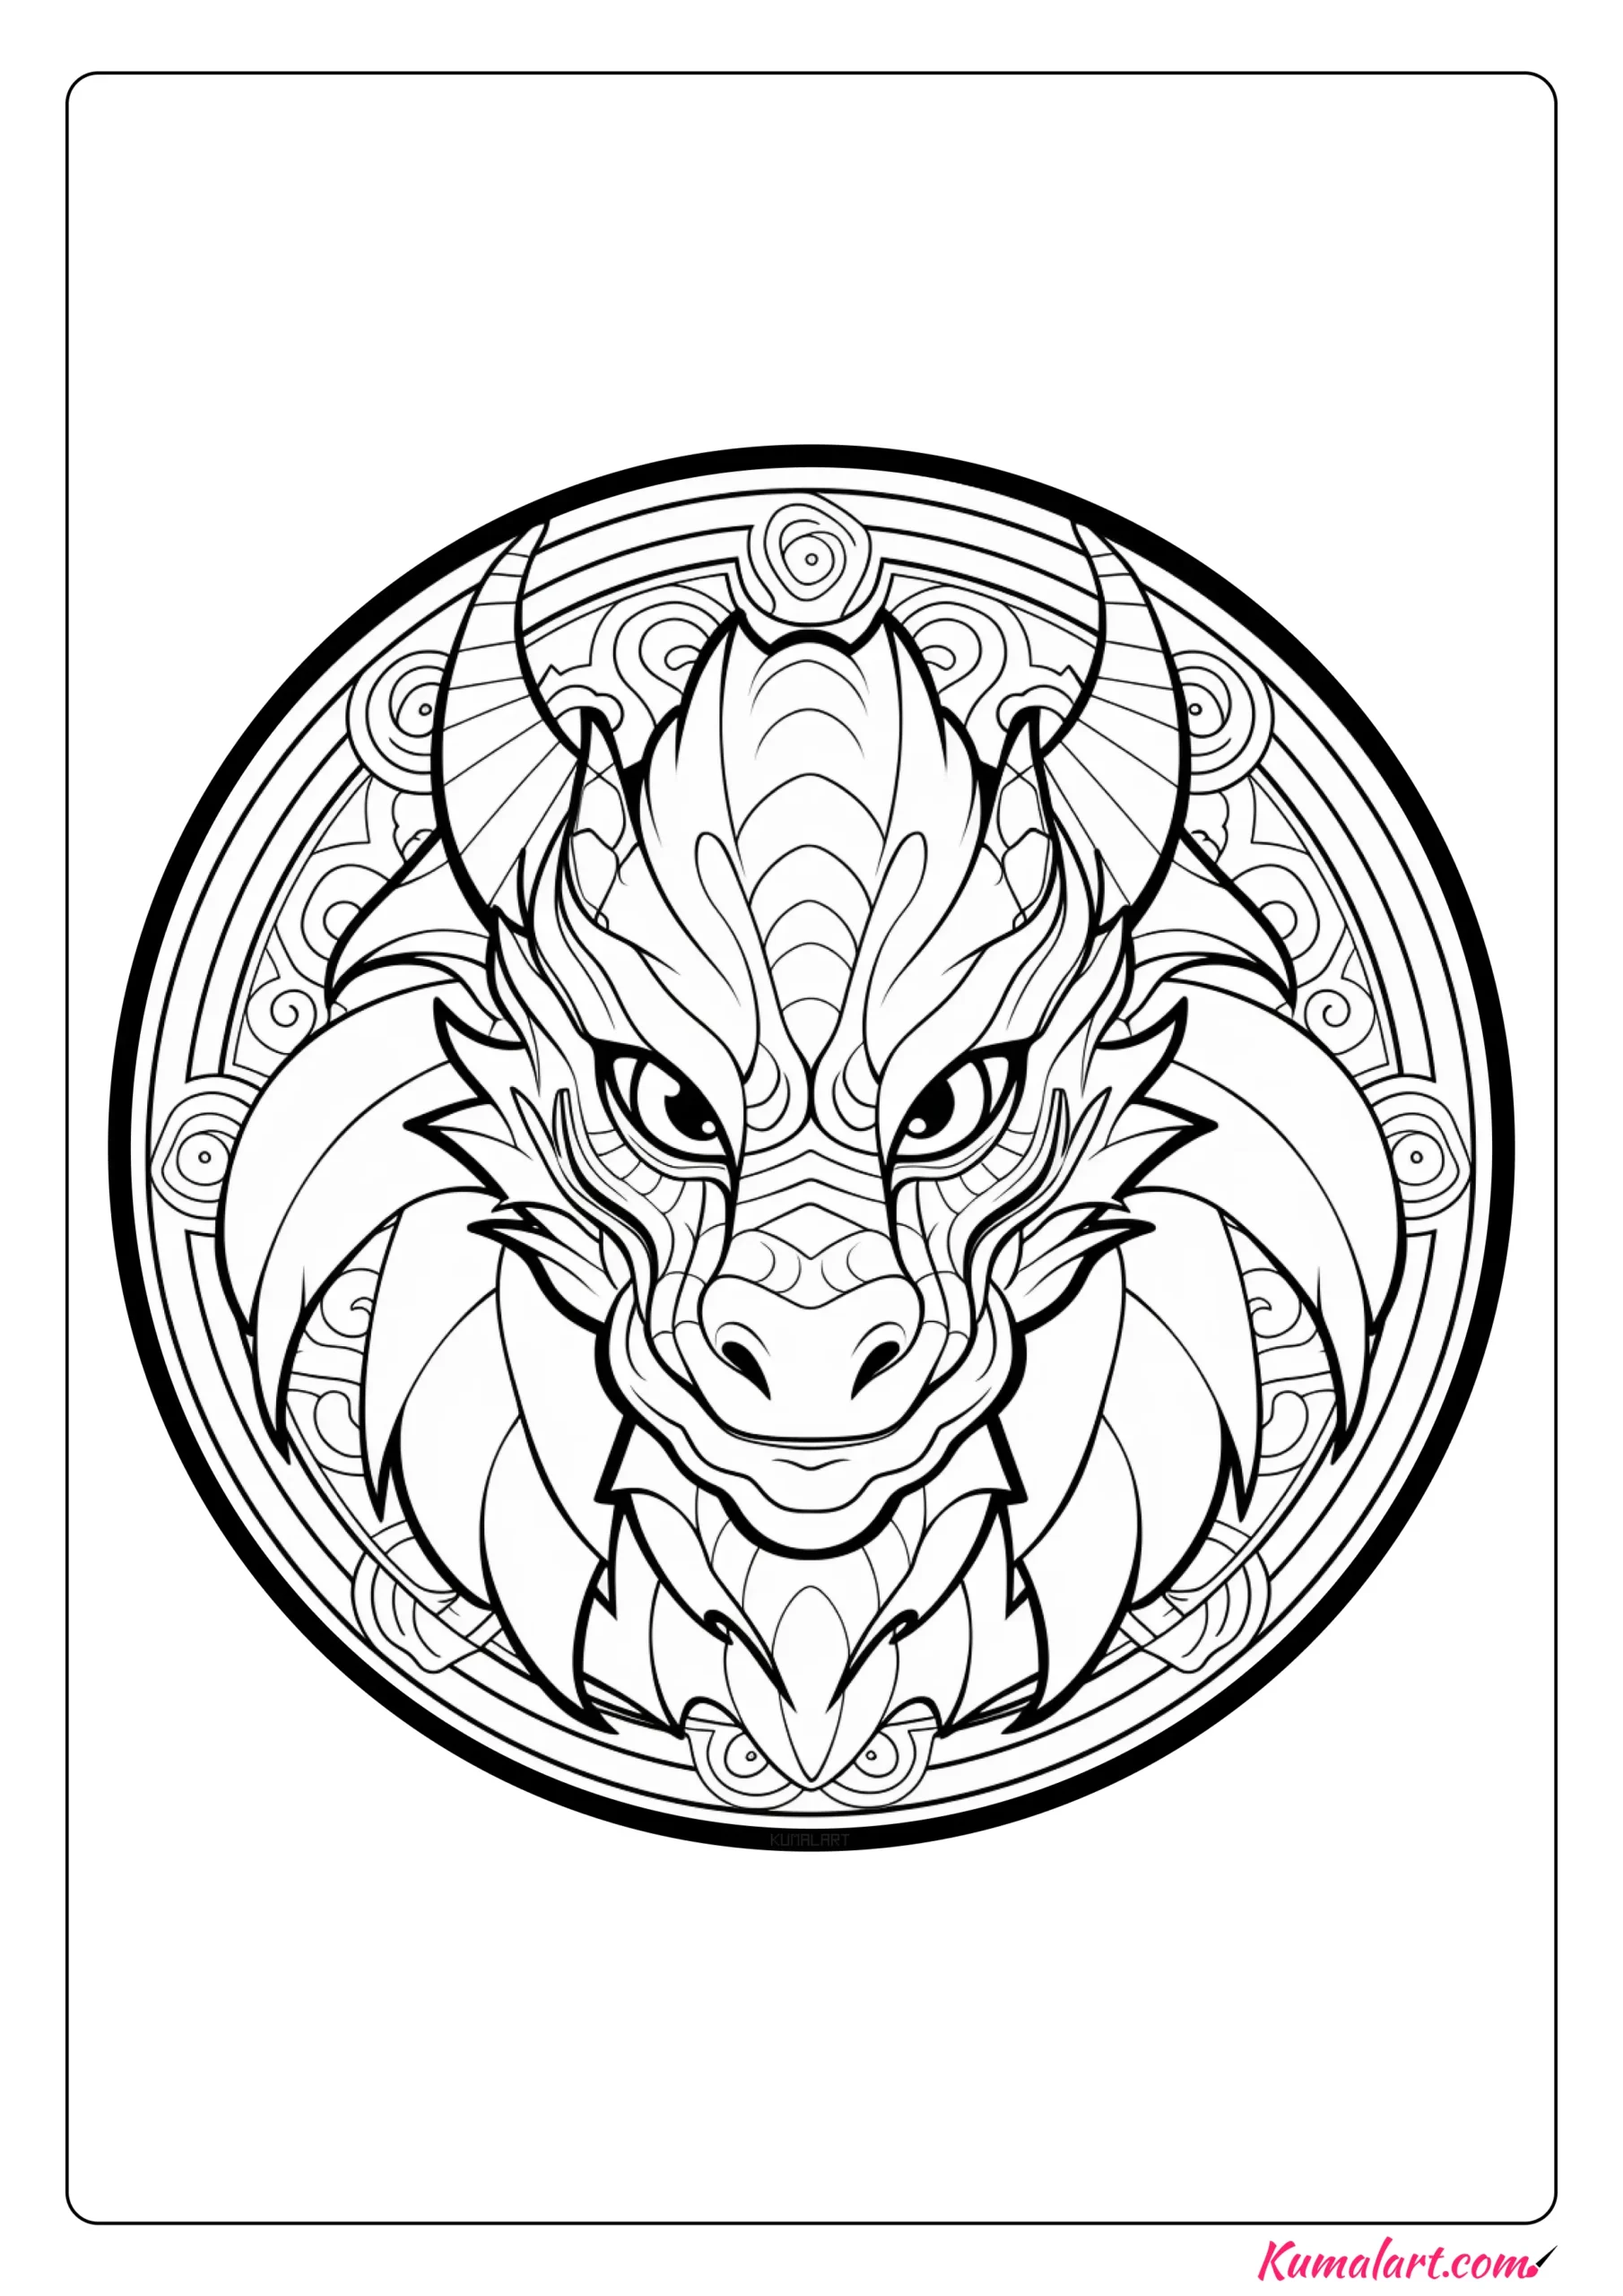 Peter The Dragon Mandala Coloring Page (Printable A4 Page)